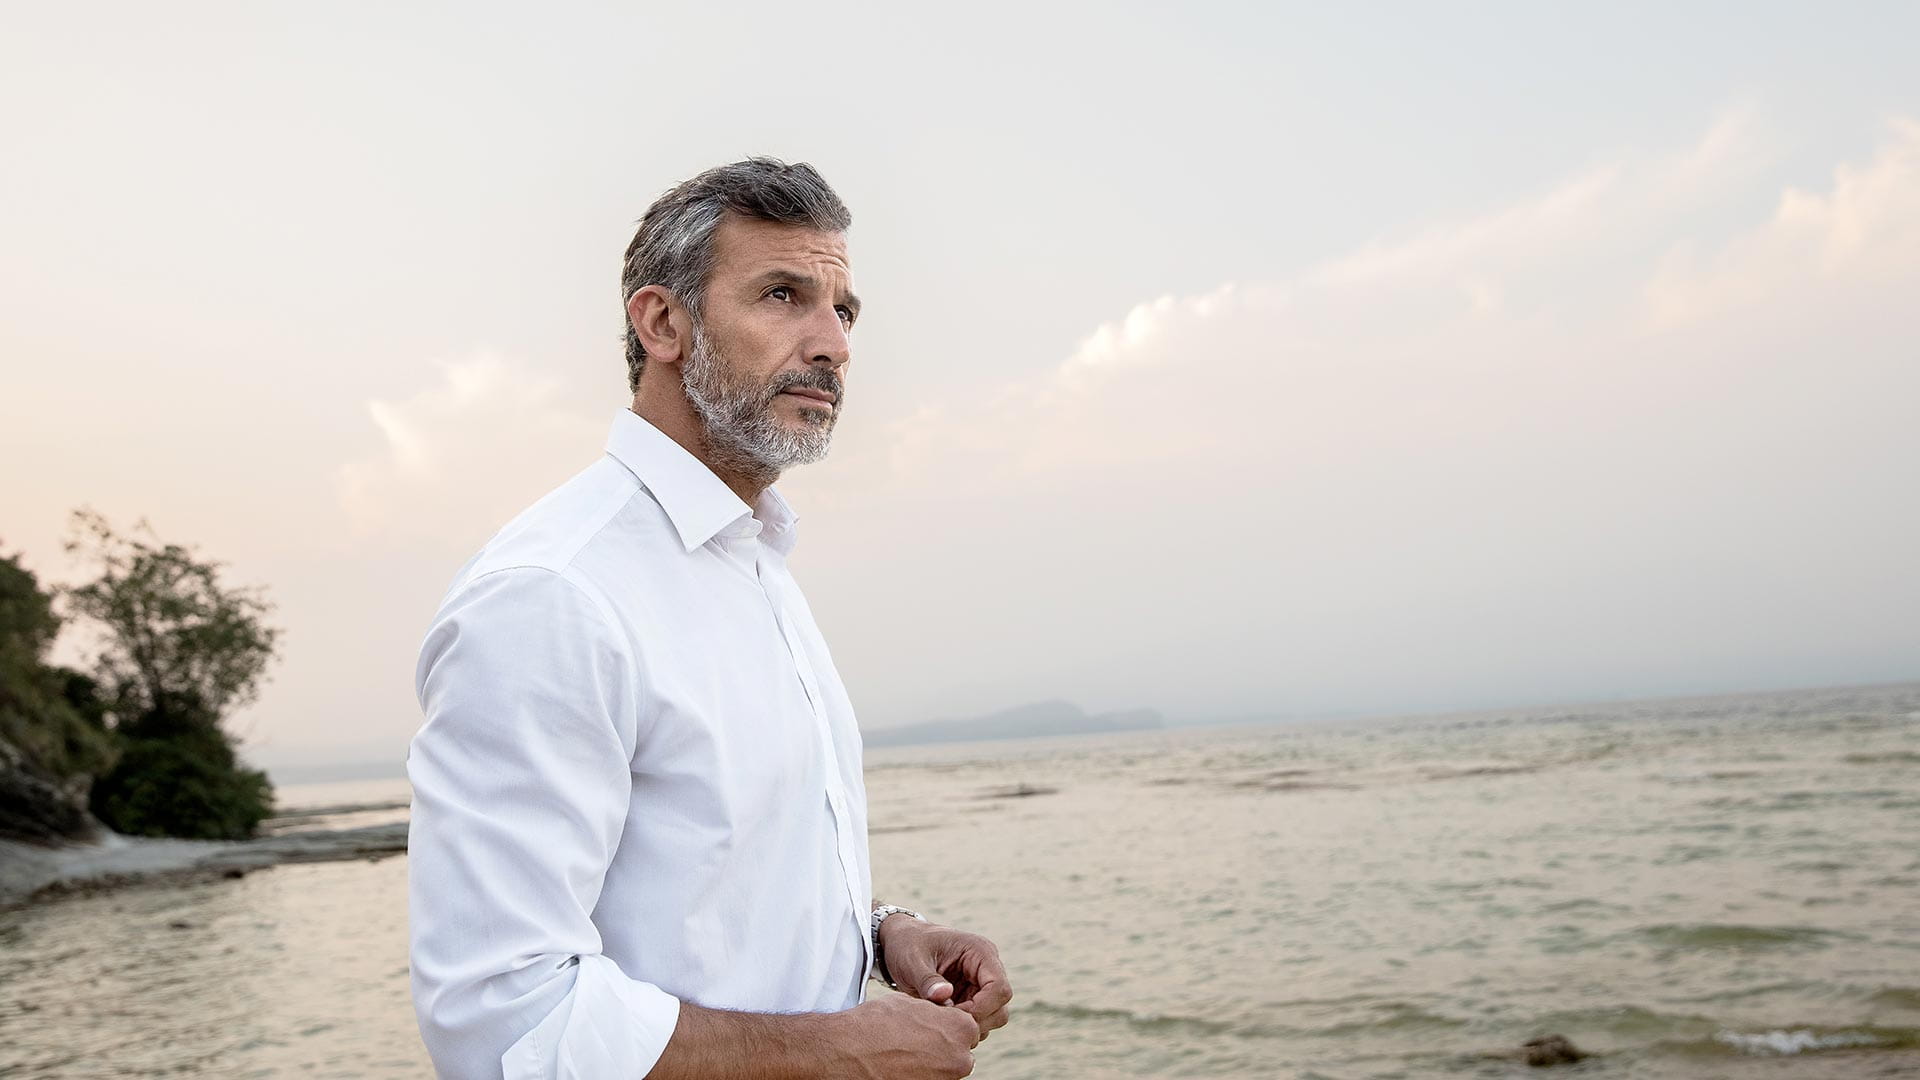 Man with Evoke hearing aids standing on beach